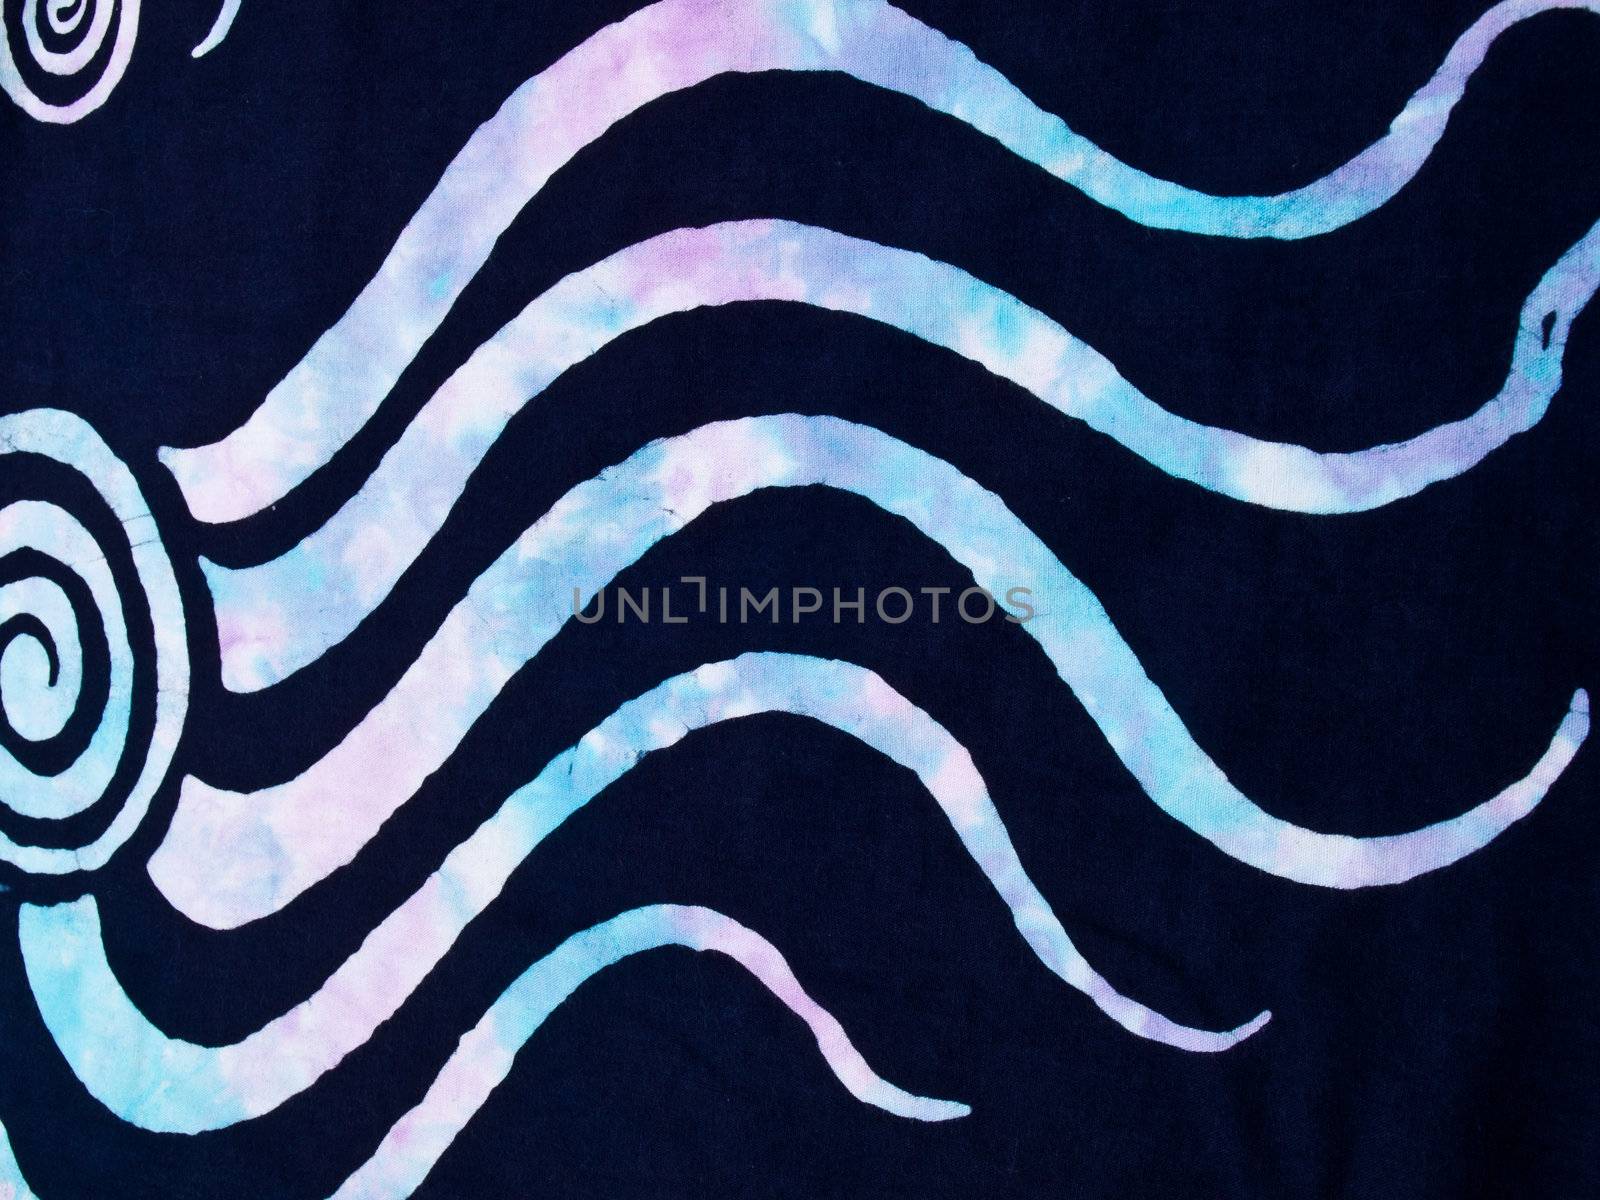 Colorful pattern on black fabric batik as background